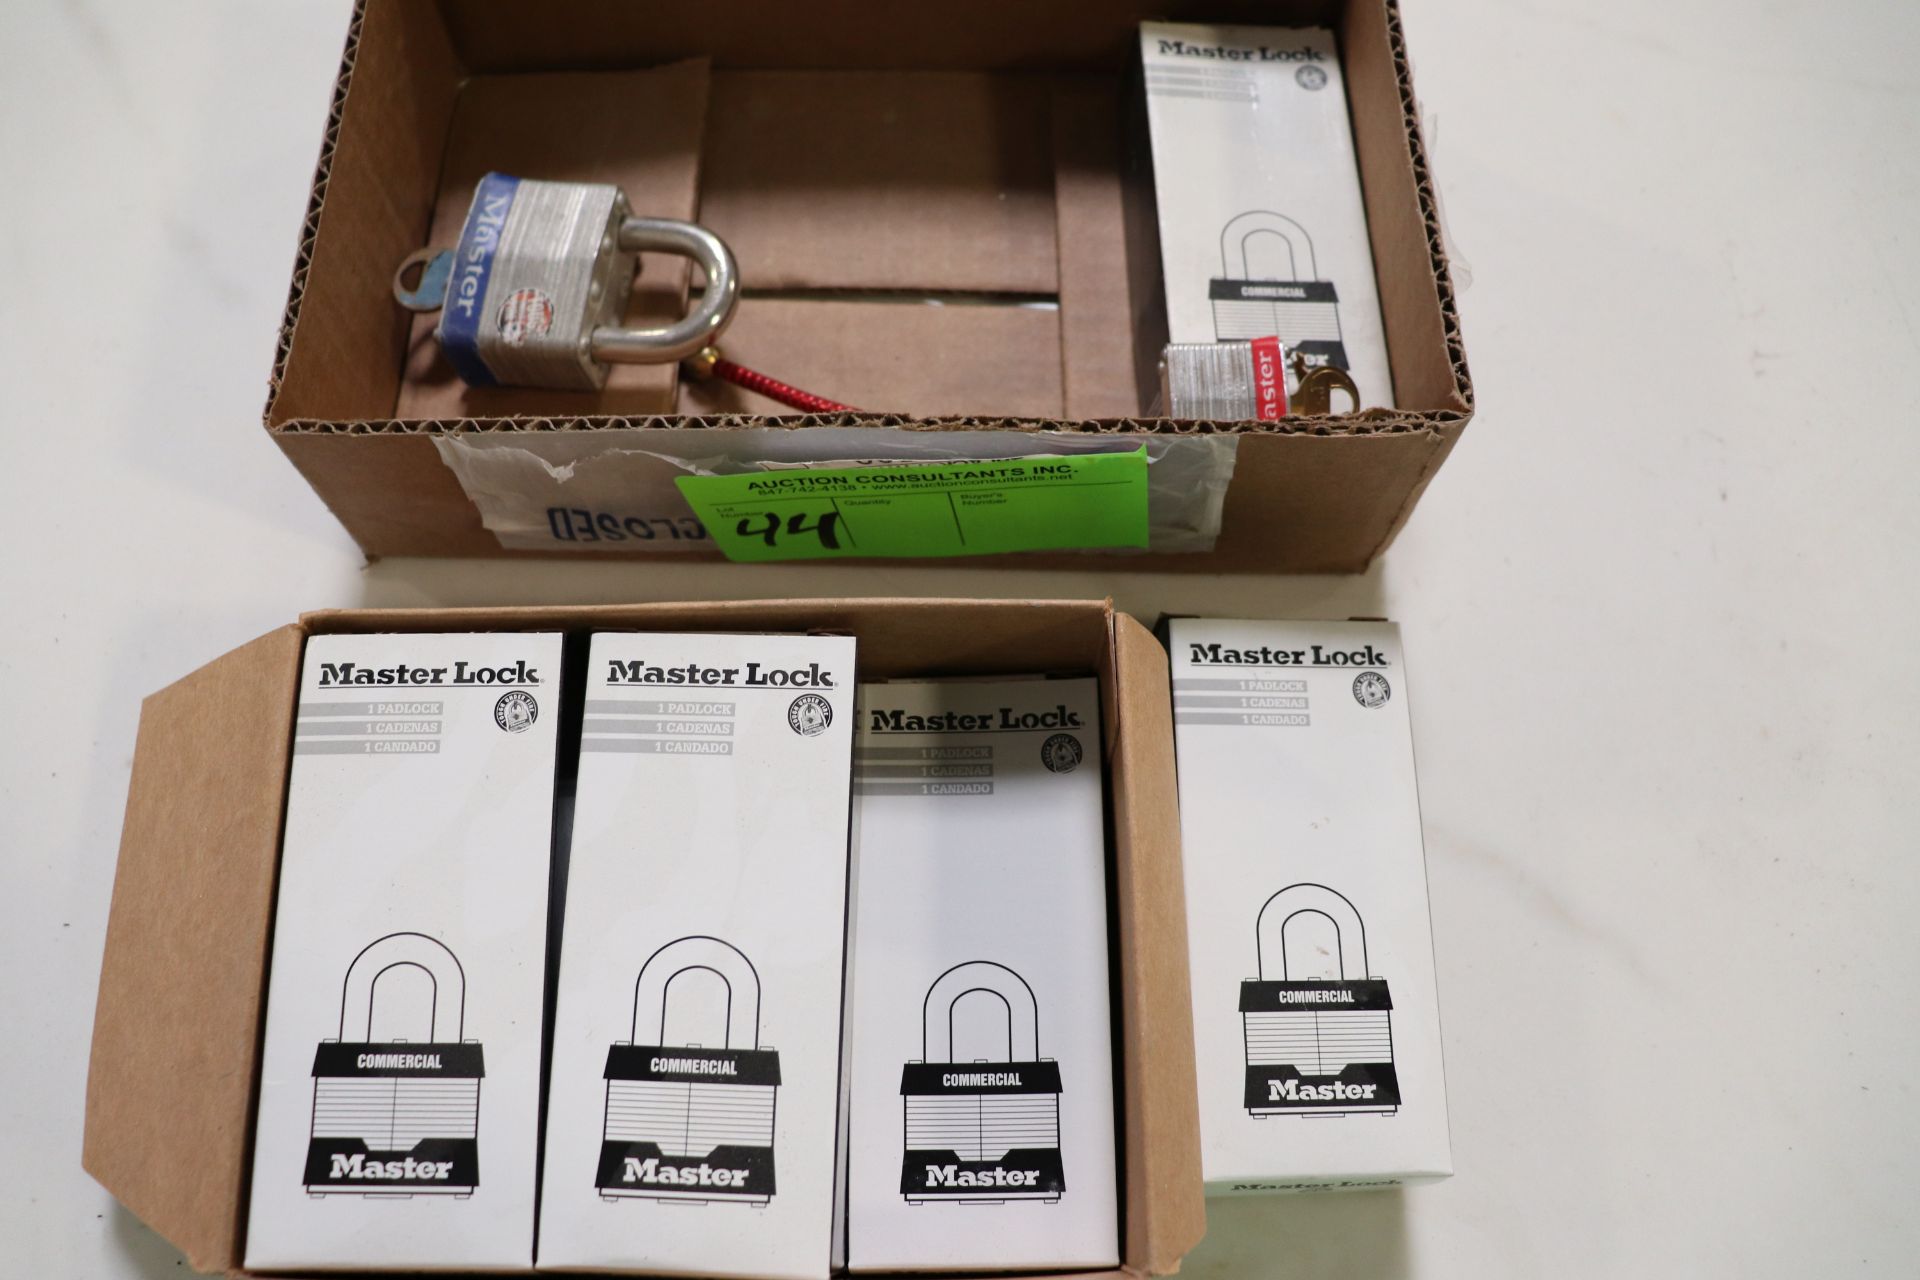 Commercial master locks in box